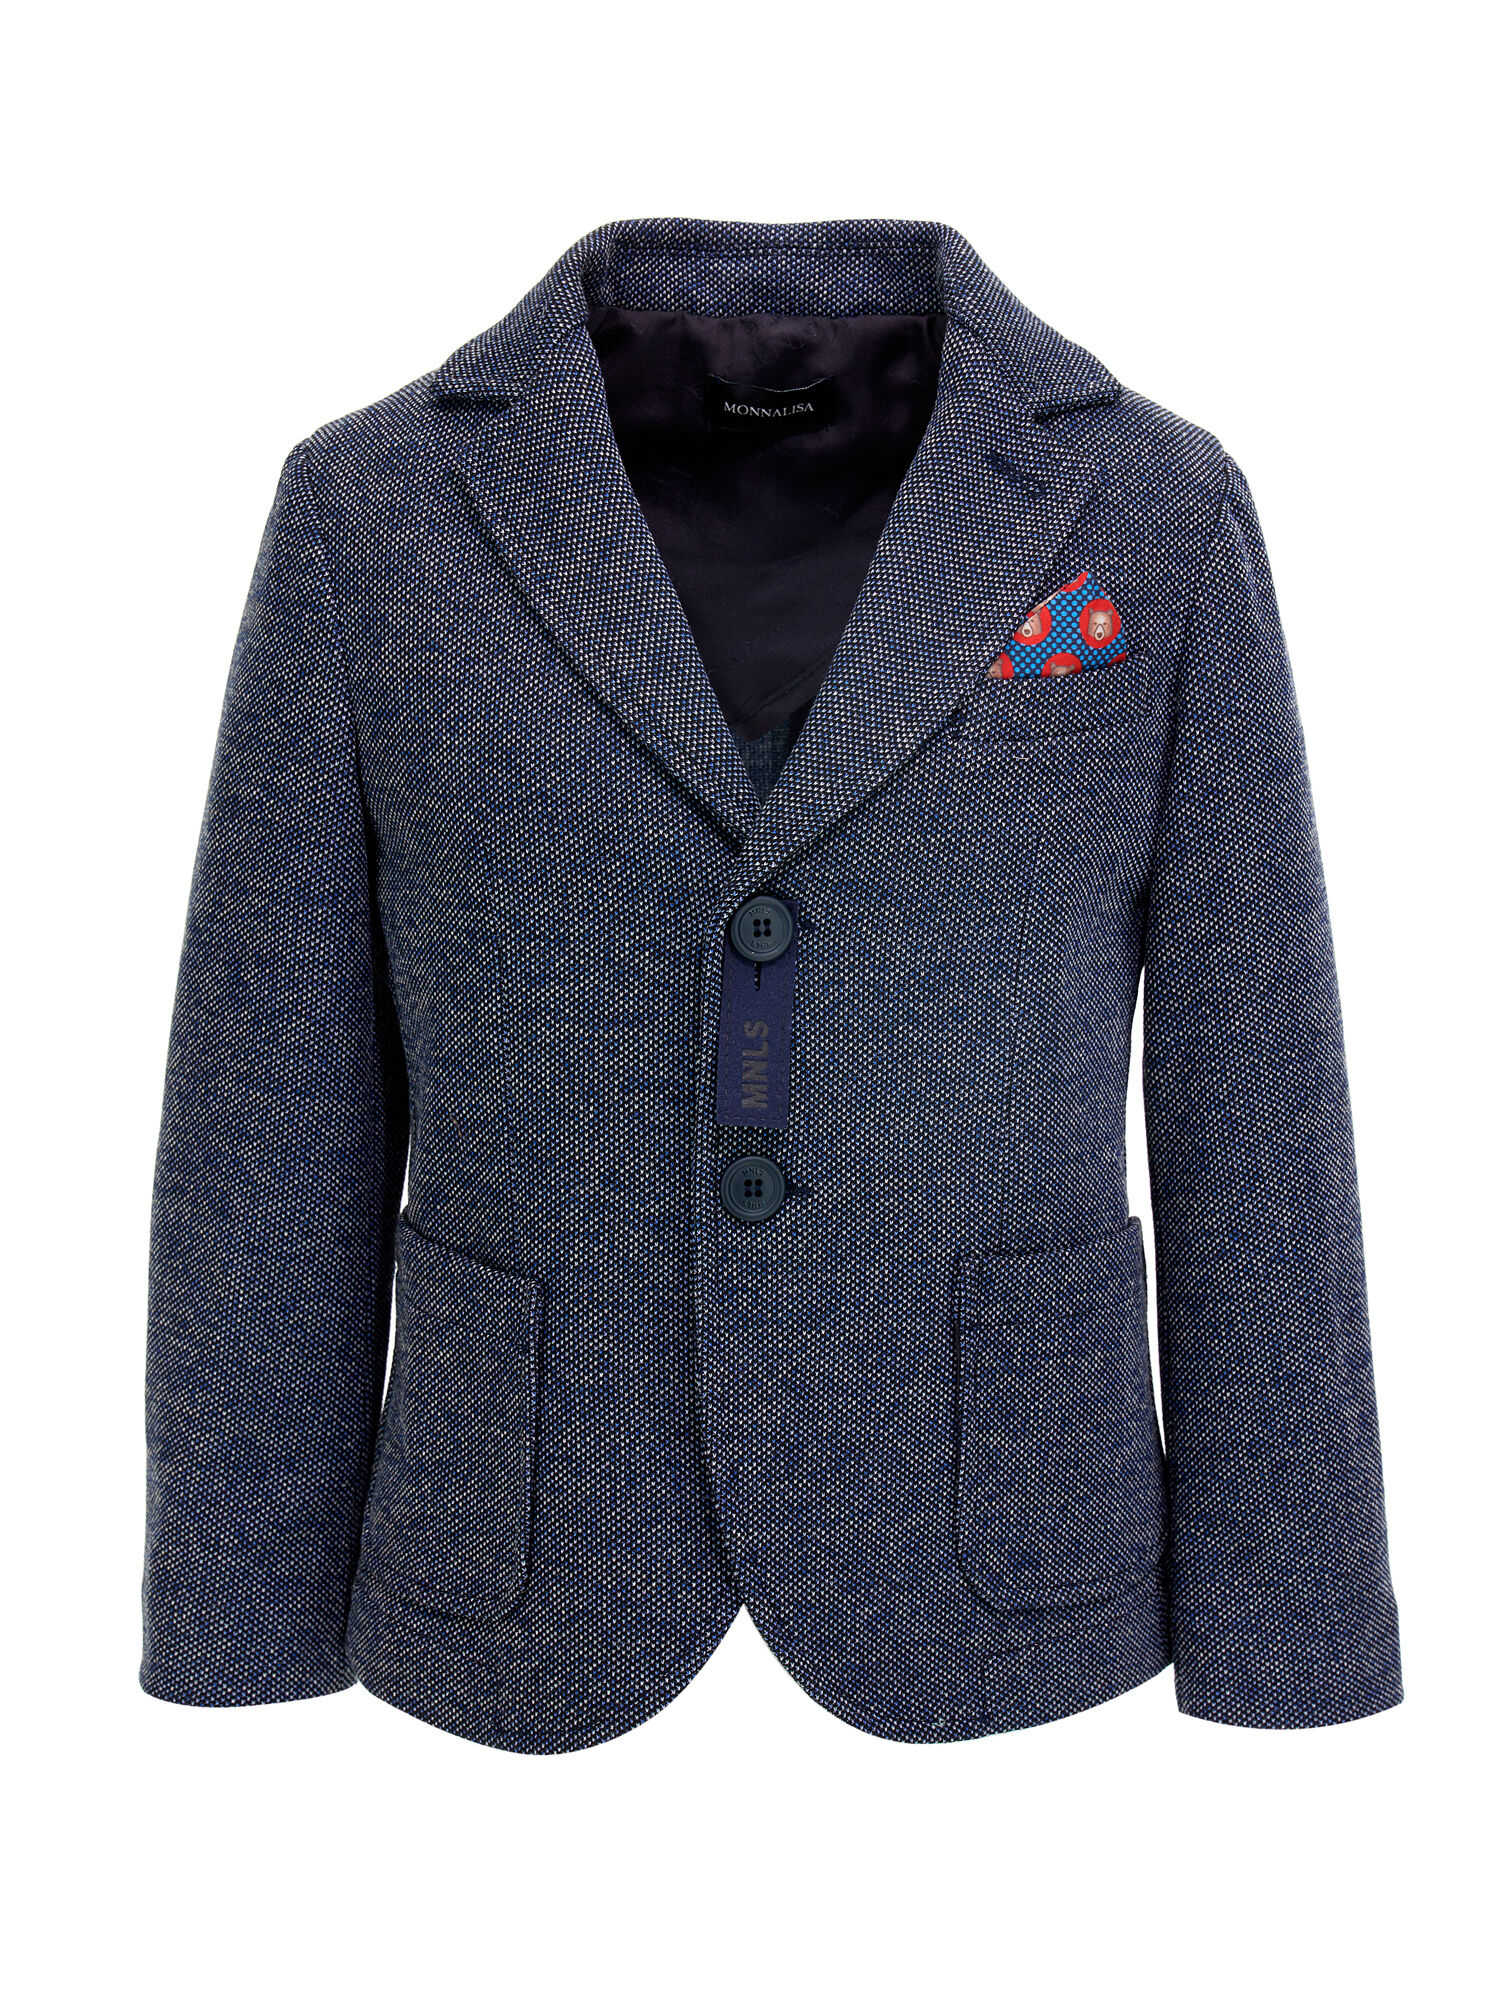 Monnalisa Boys Clothing Jackets Blazers Knitted jacket with pocket square 